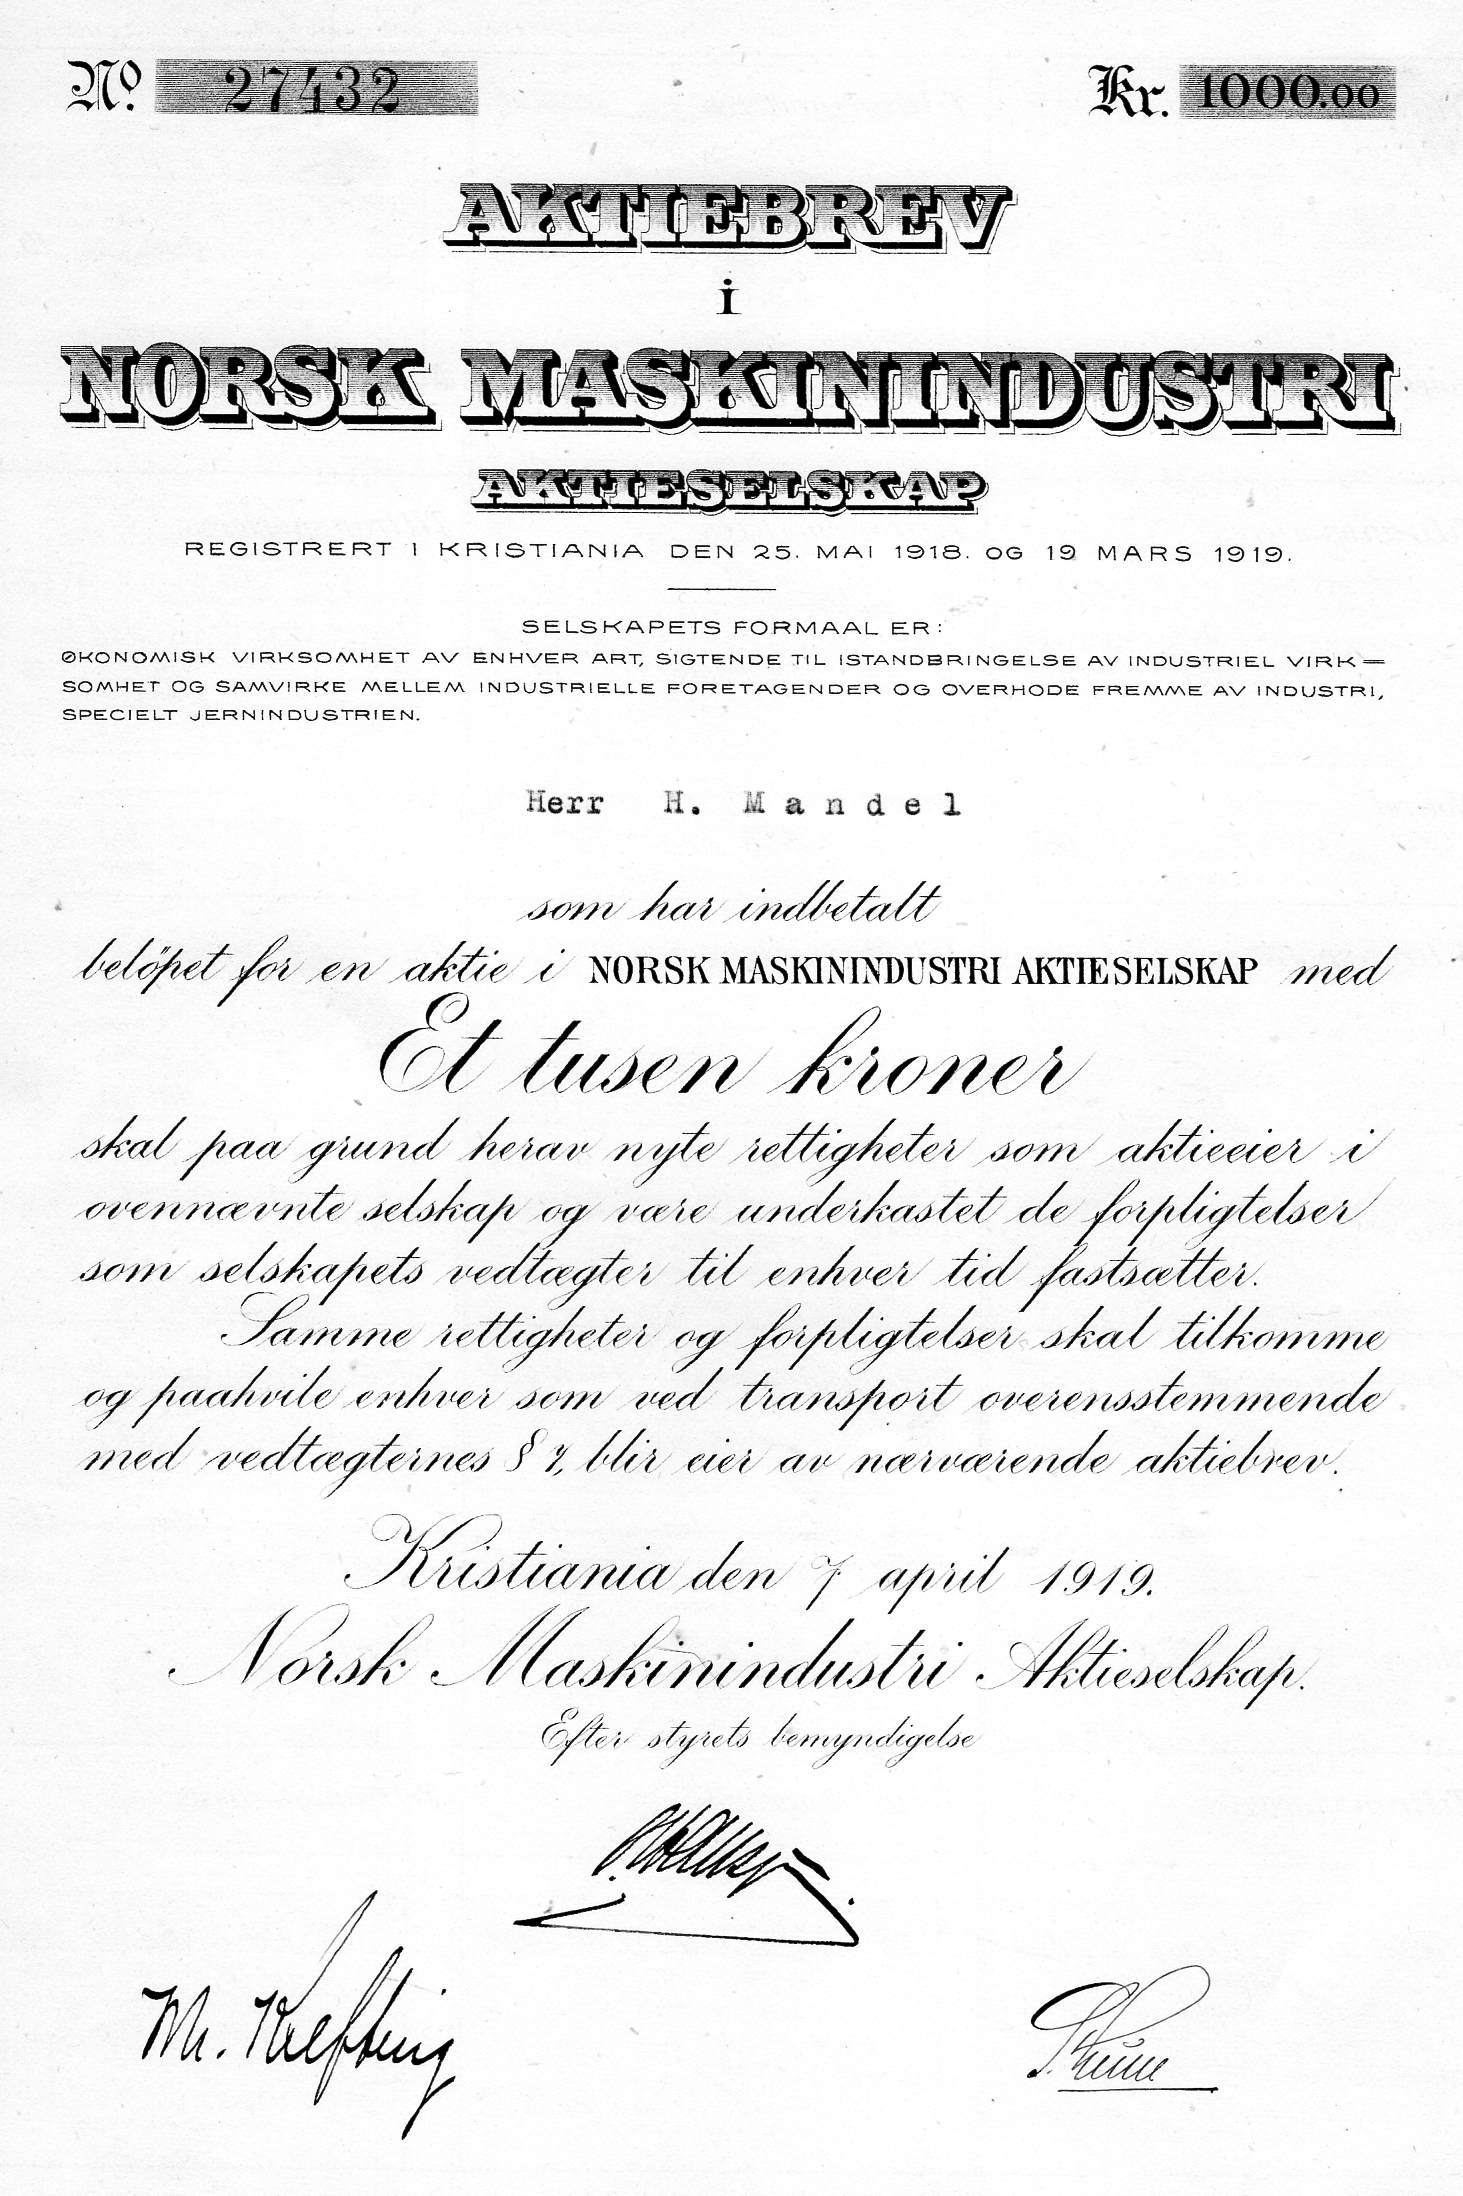 Norsk maskinindustri kristiania 1919 kr 1000 nr 27432/27434/31483 pris pr stk.